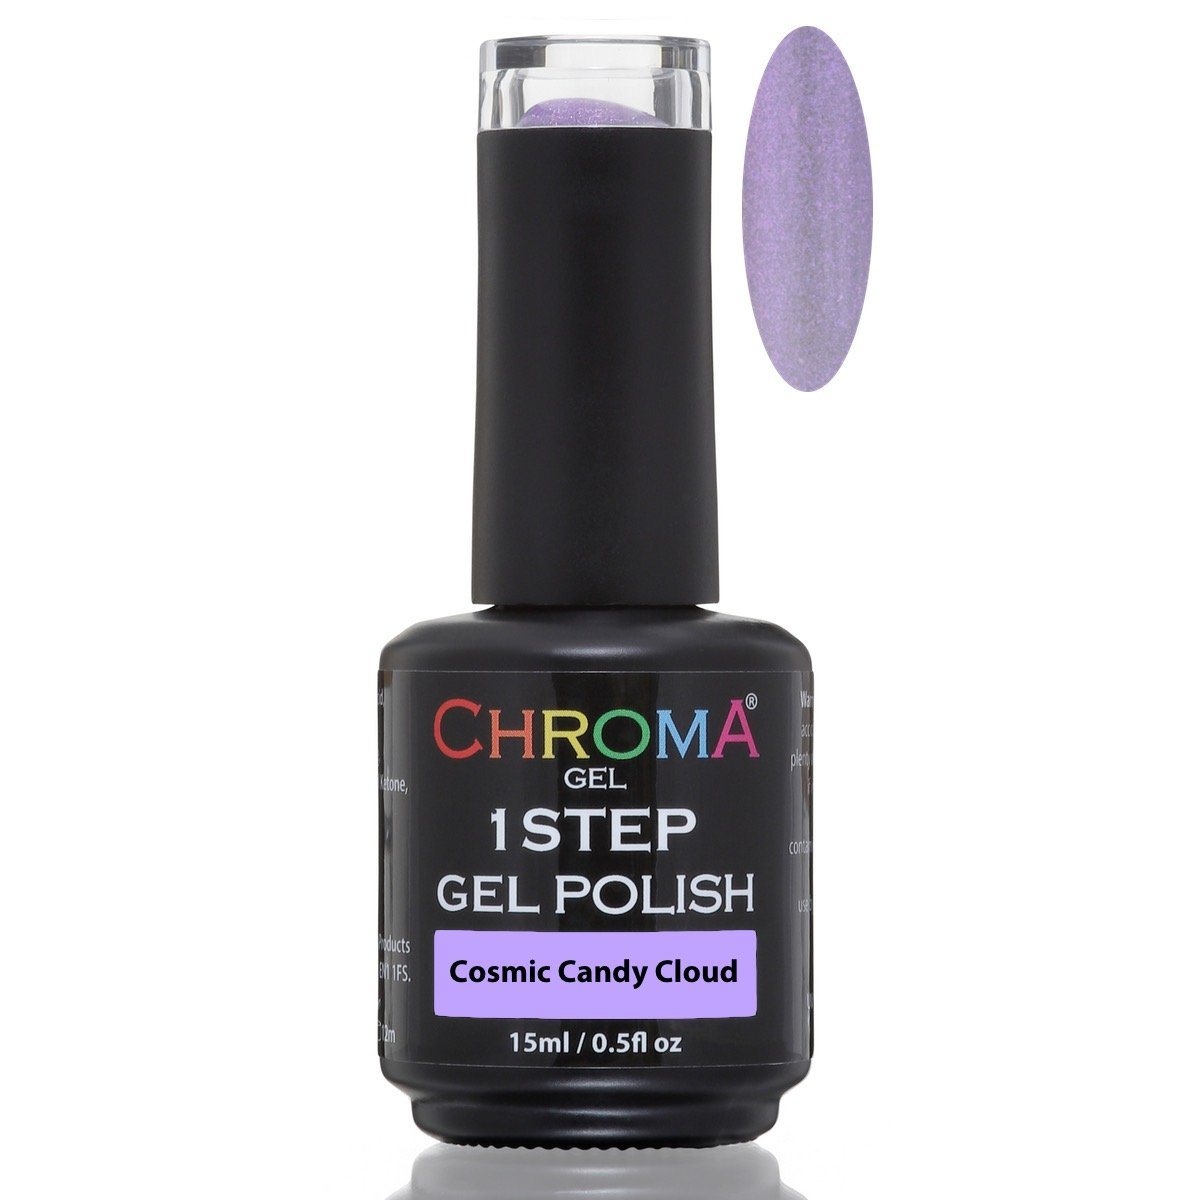 Chroma Gel 1 Step Gel Polish Cosmic Candy Cloud No.76 - Beauty Hair Products LtdChroma Gel